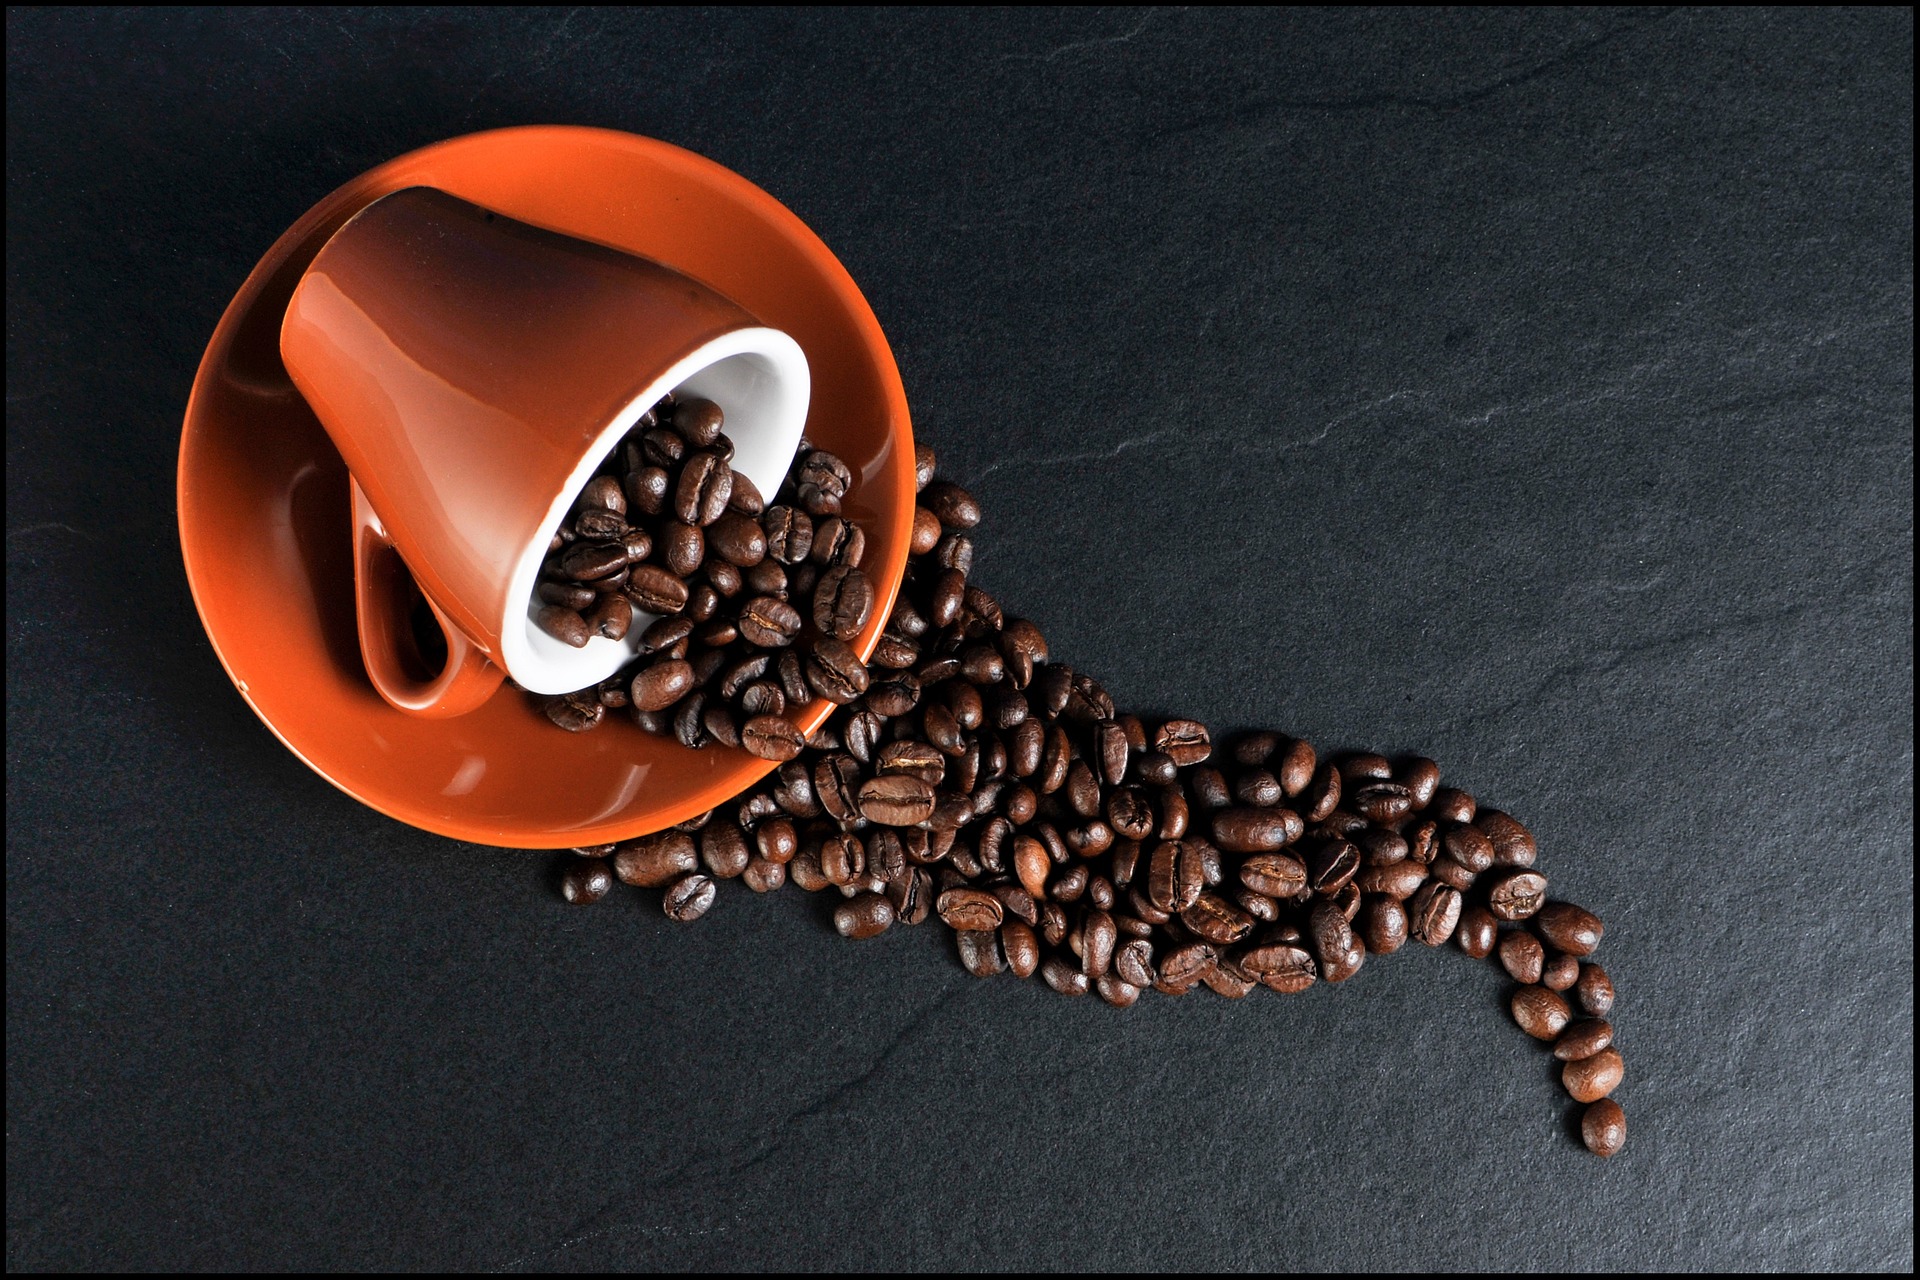 A spilled mug full of coffee beans